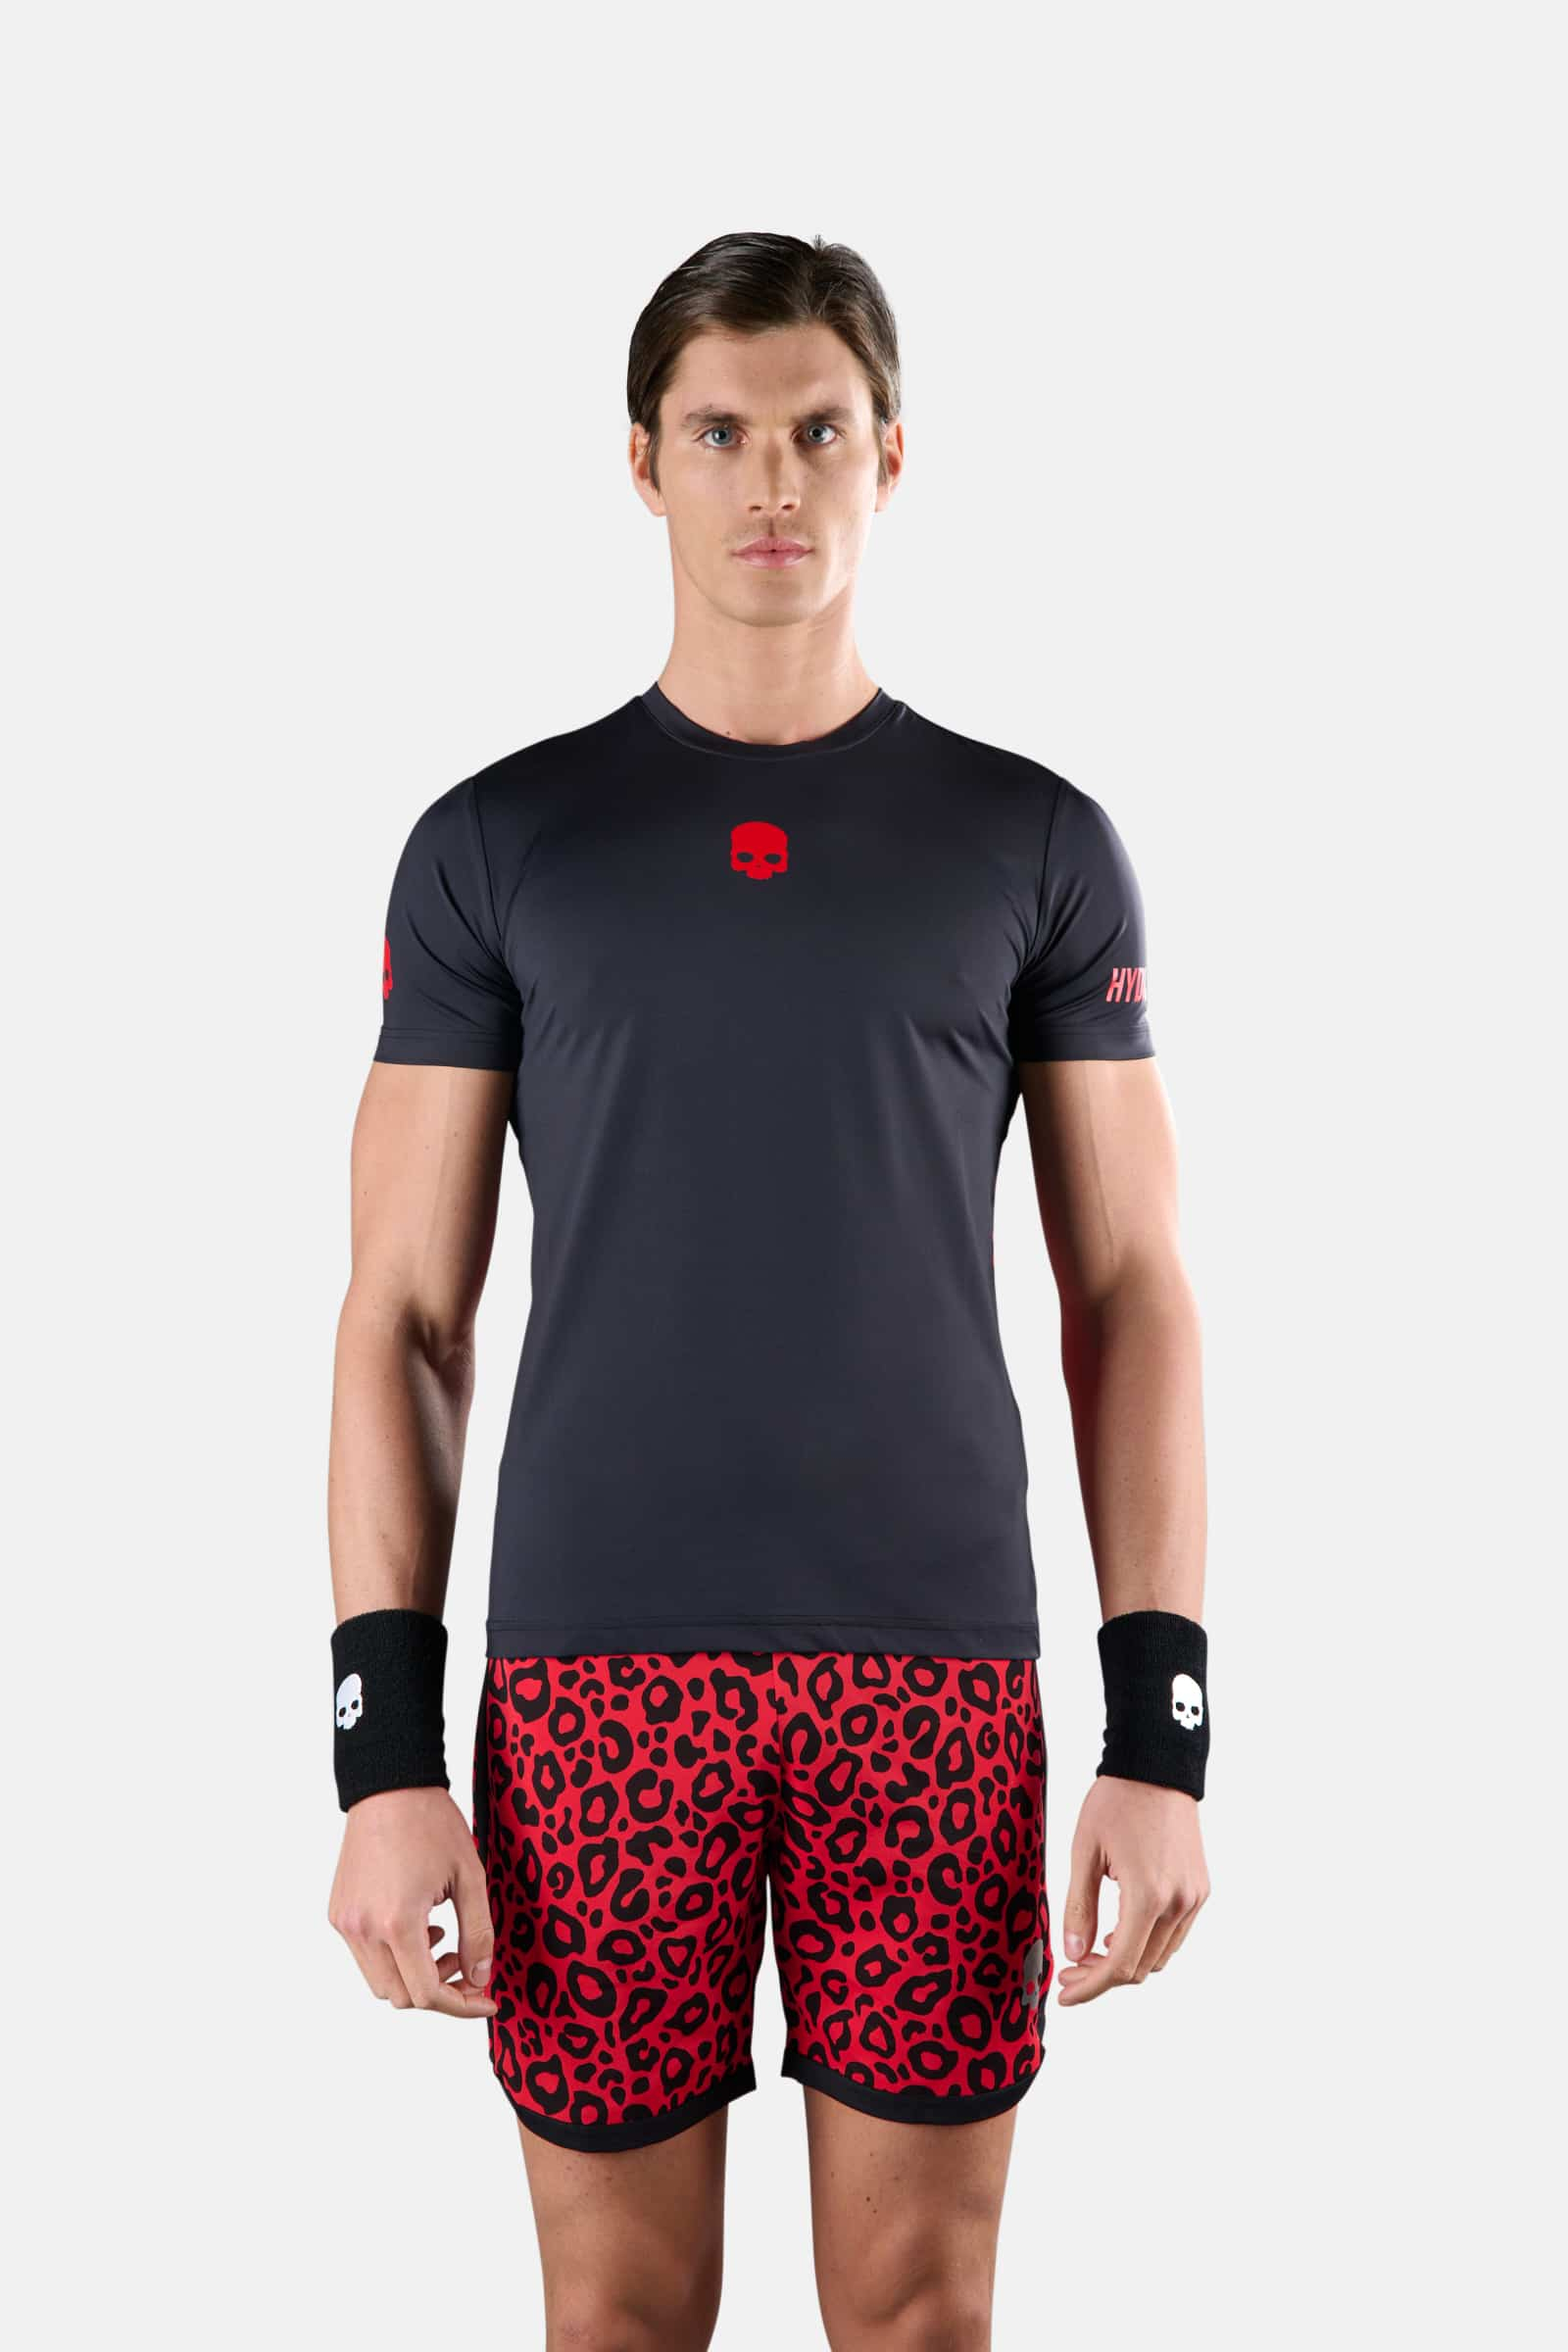 T-SHIRT TECNICA PANTHER - BLACK,RED - Abbigliamento sportivo | Hydrogen